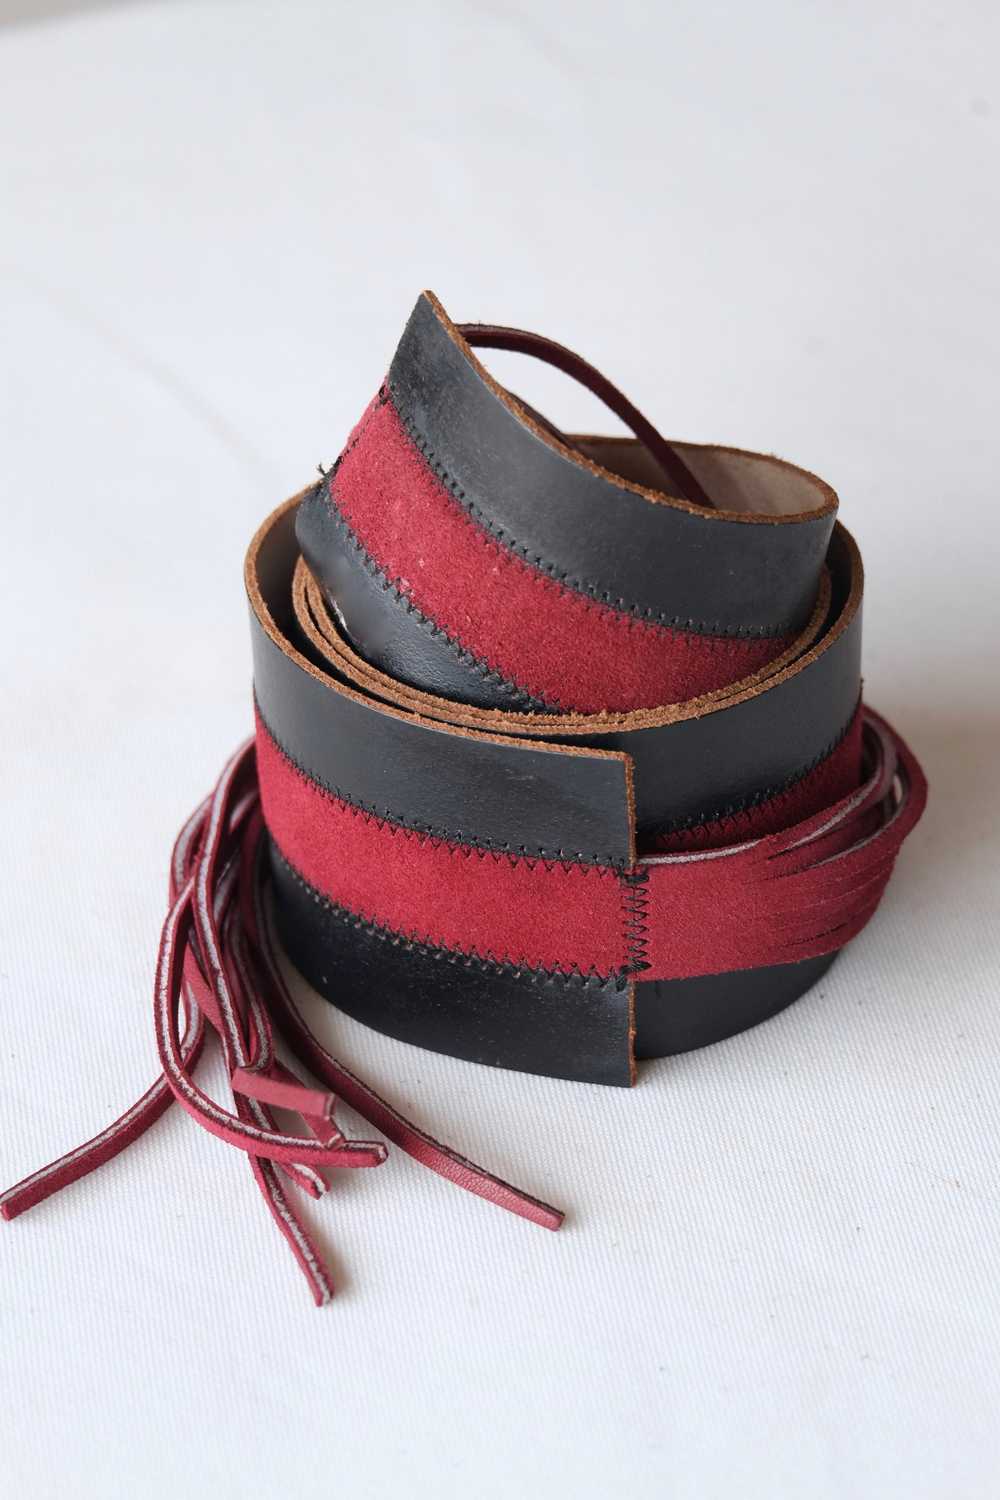 L'AIGLON Leather & Suede Tassels Belt - image 6